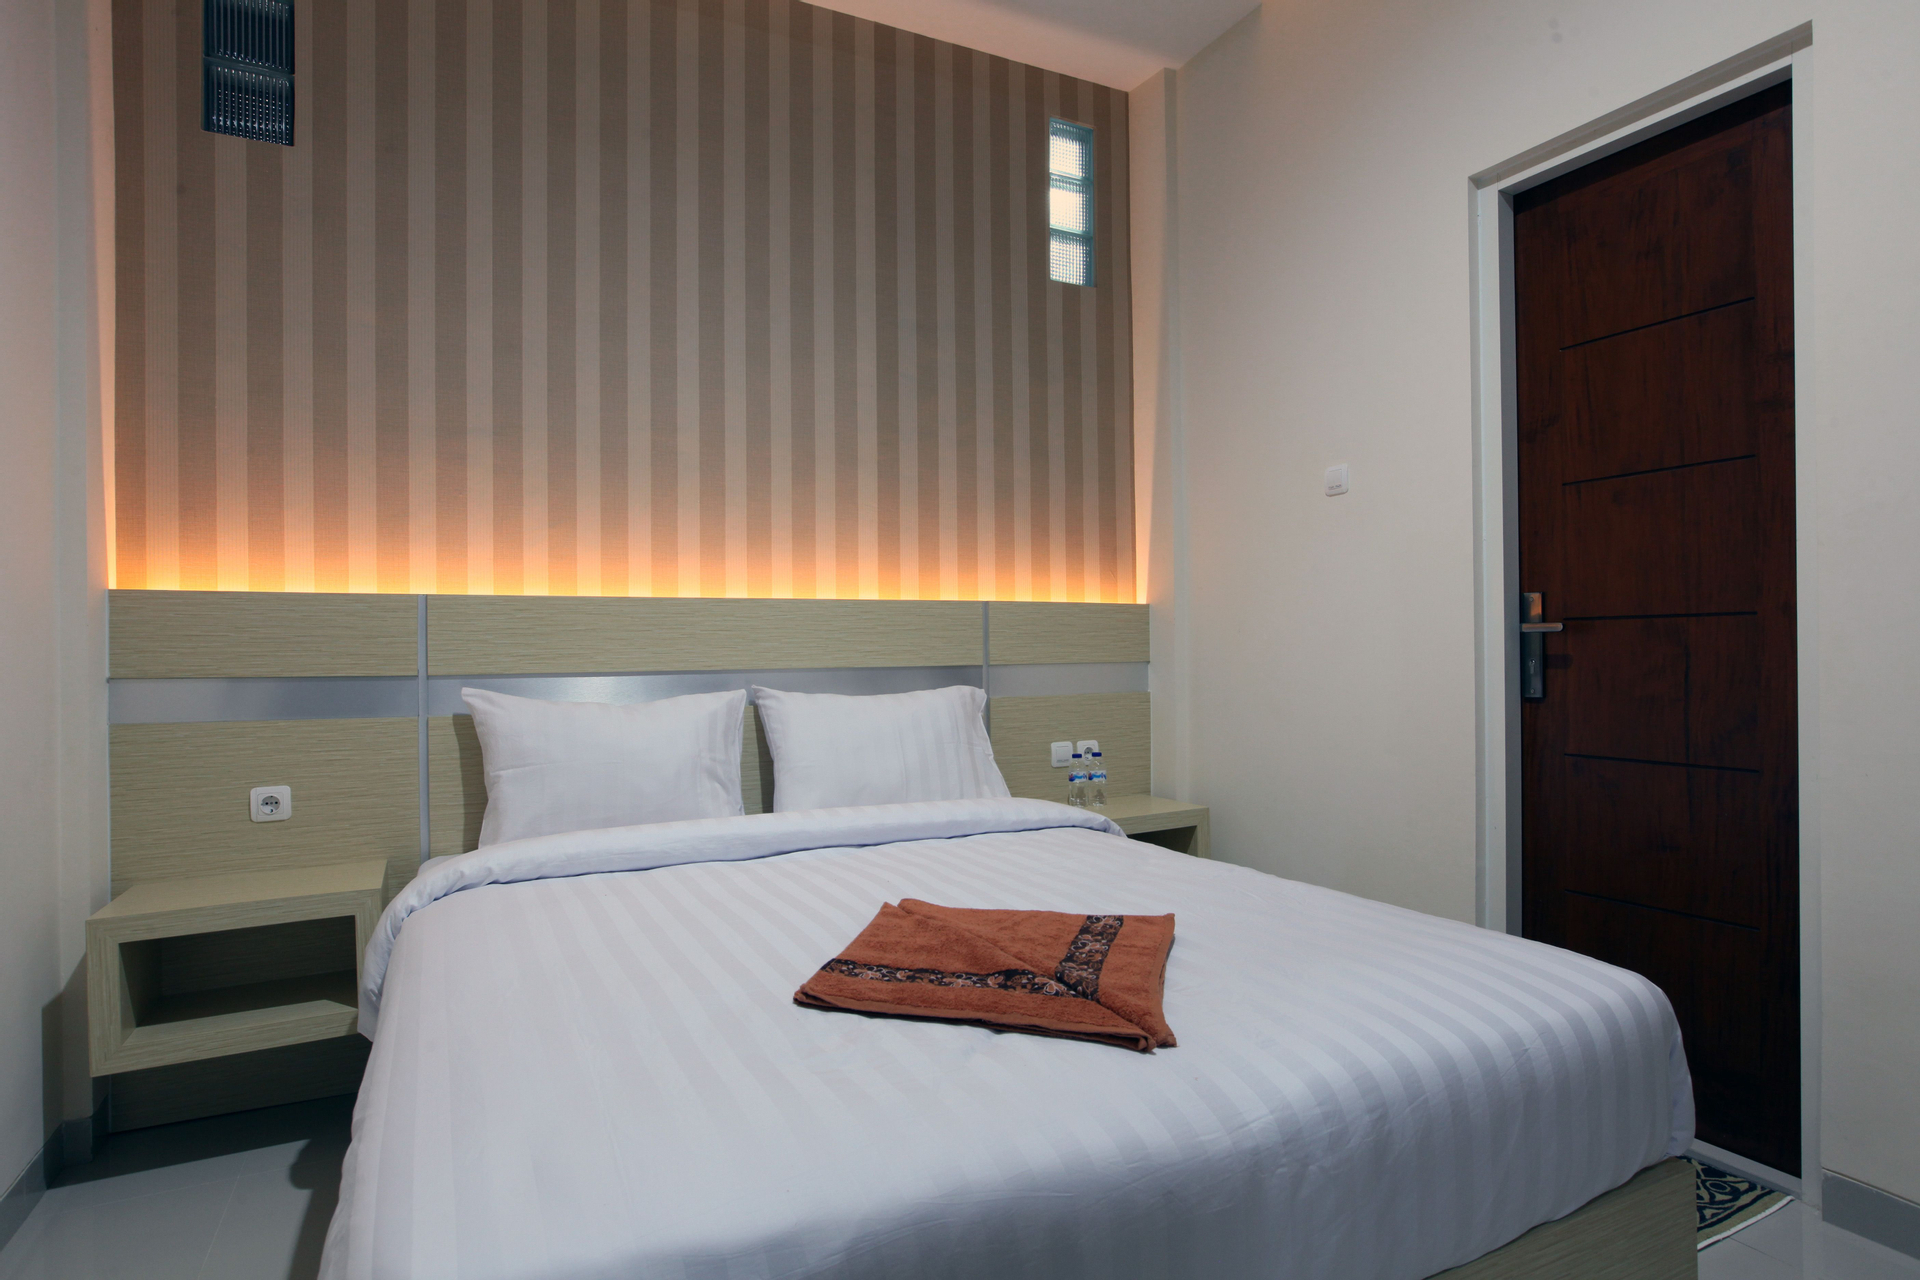 Bedroom 2, SARAS City Hotel, Tuban